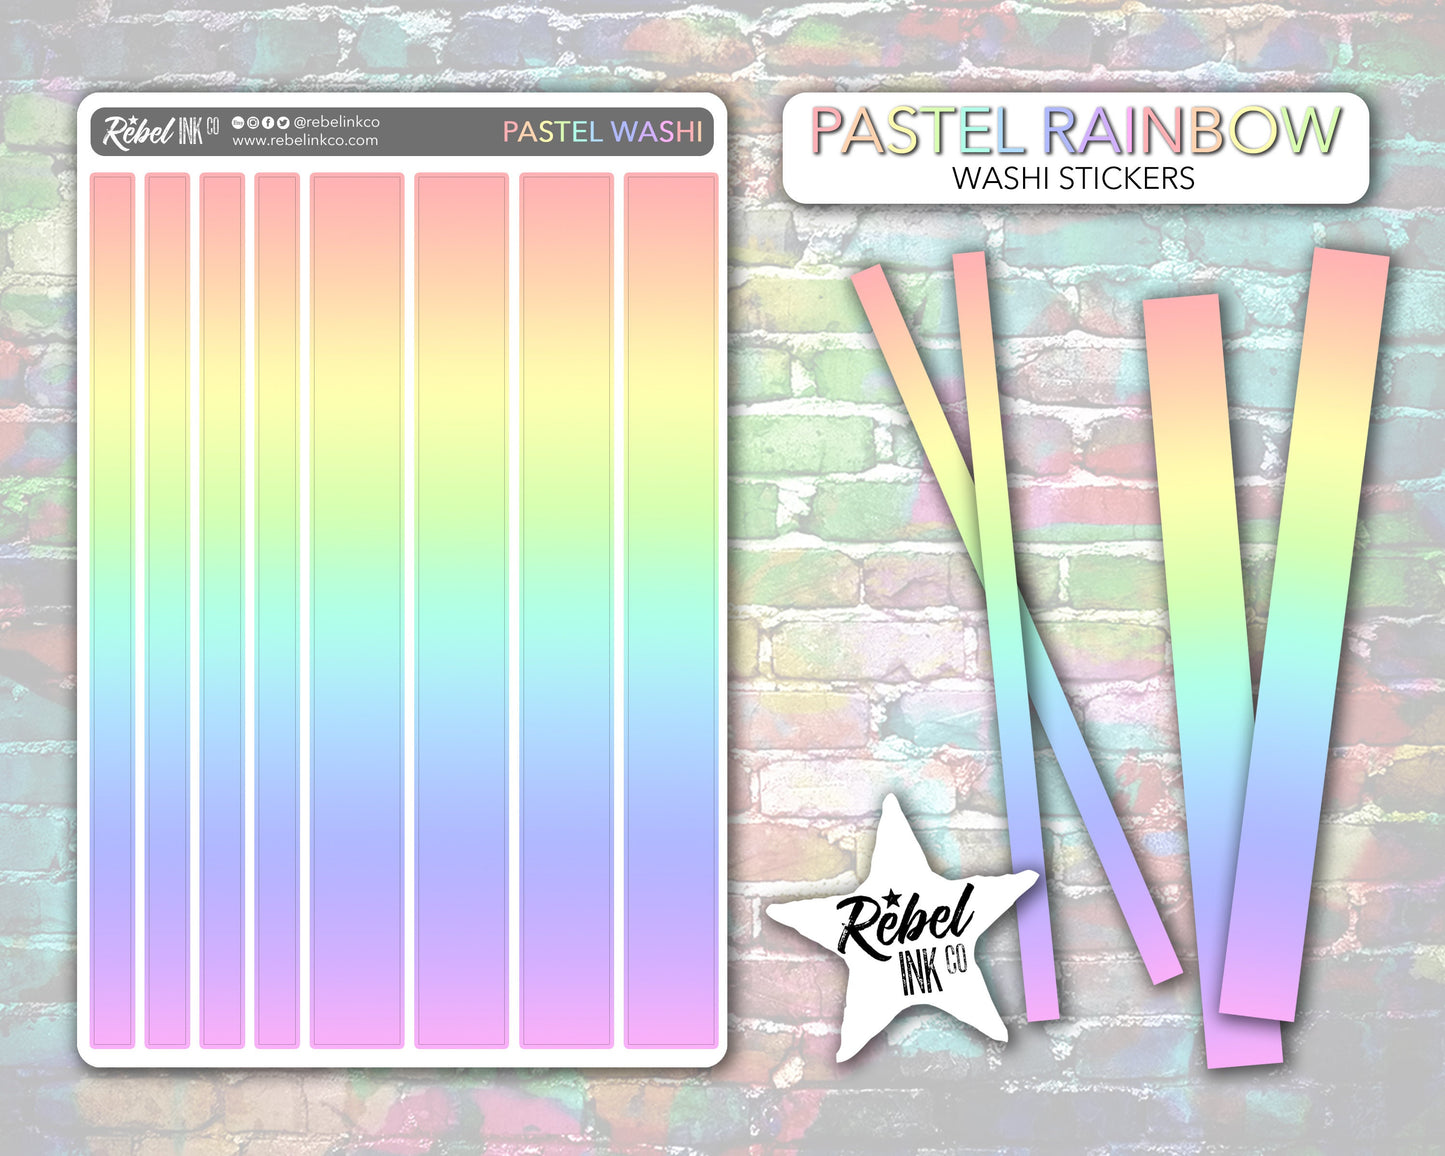 Rainbow Washi Stickers - Pastel Rainbow